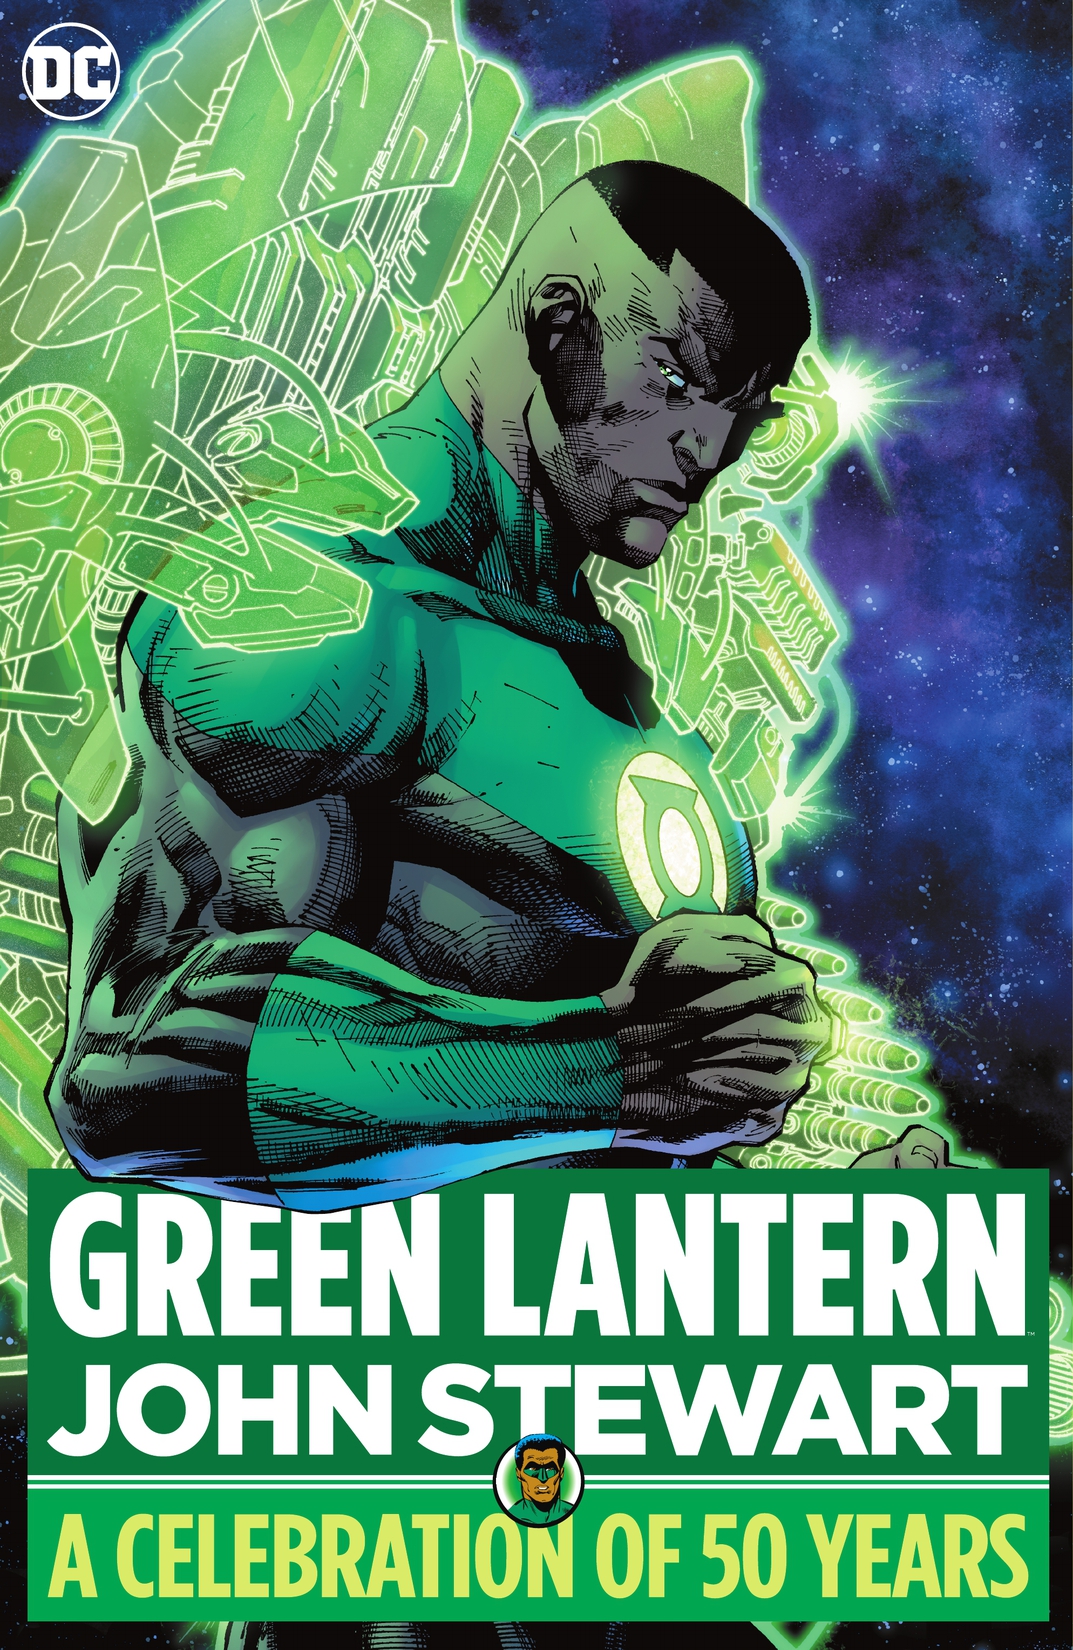 Green Lantern: John Stewart - A Celebration of 50 Years preview images